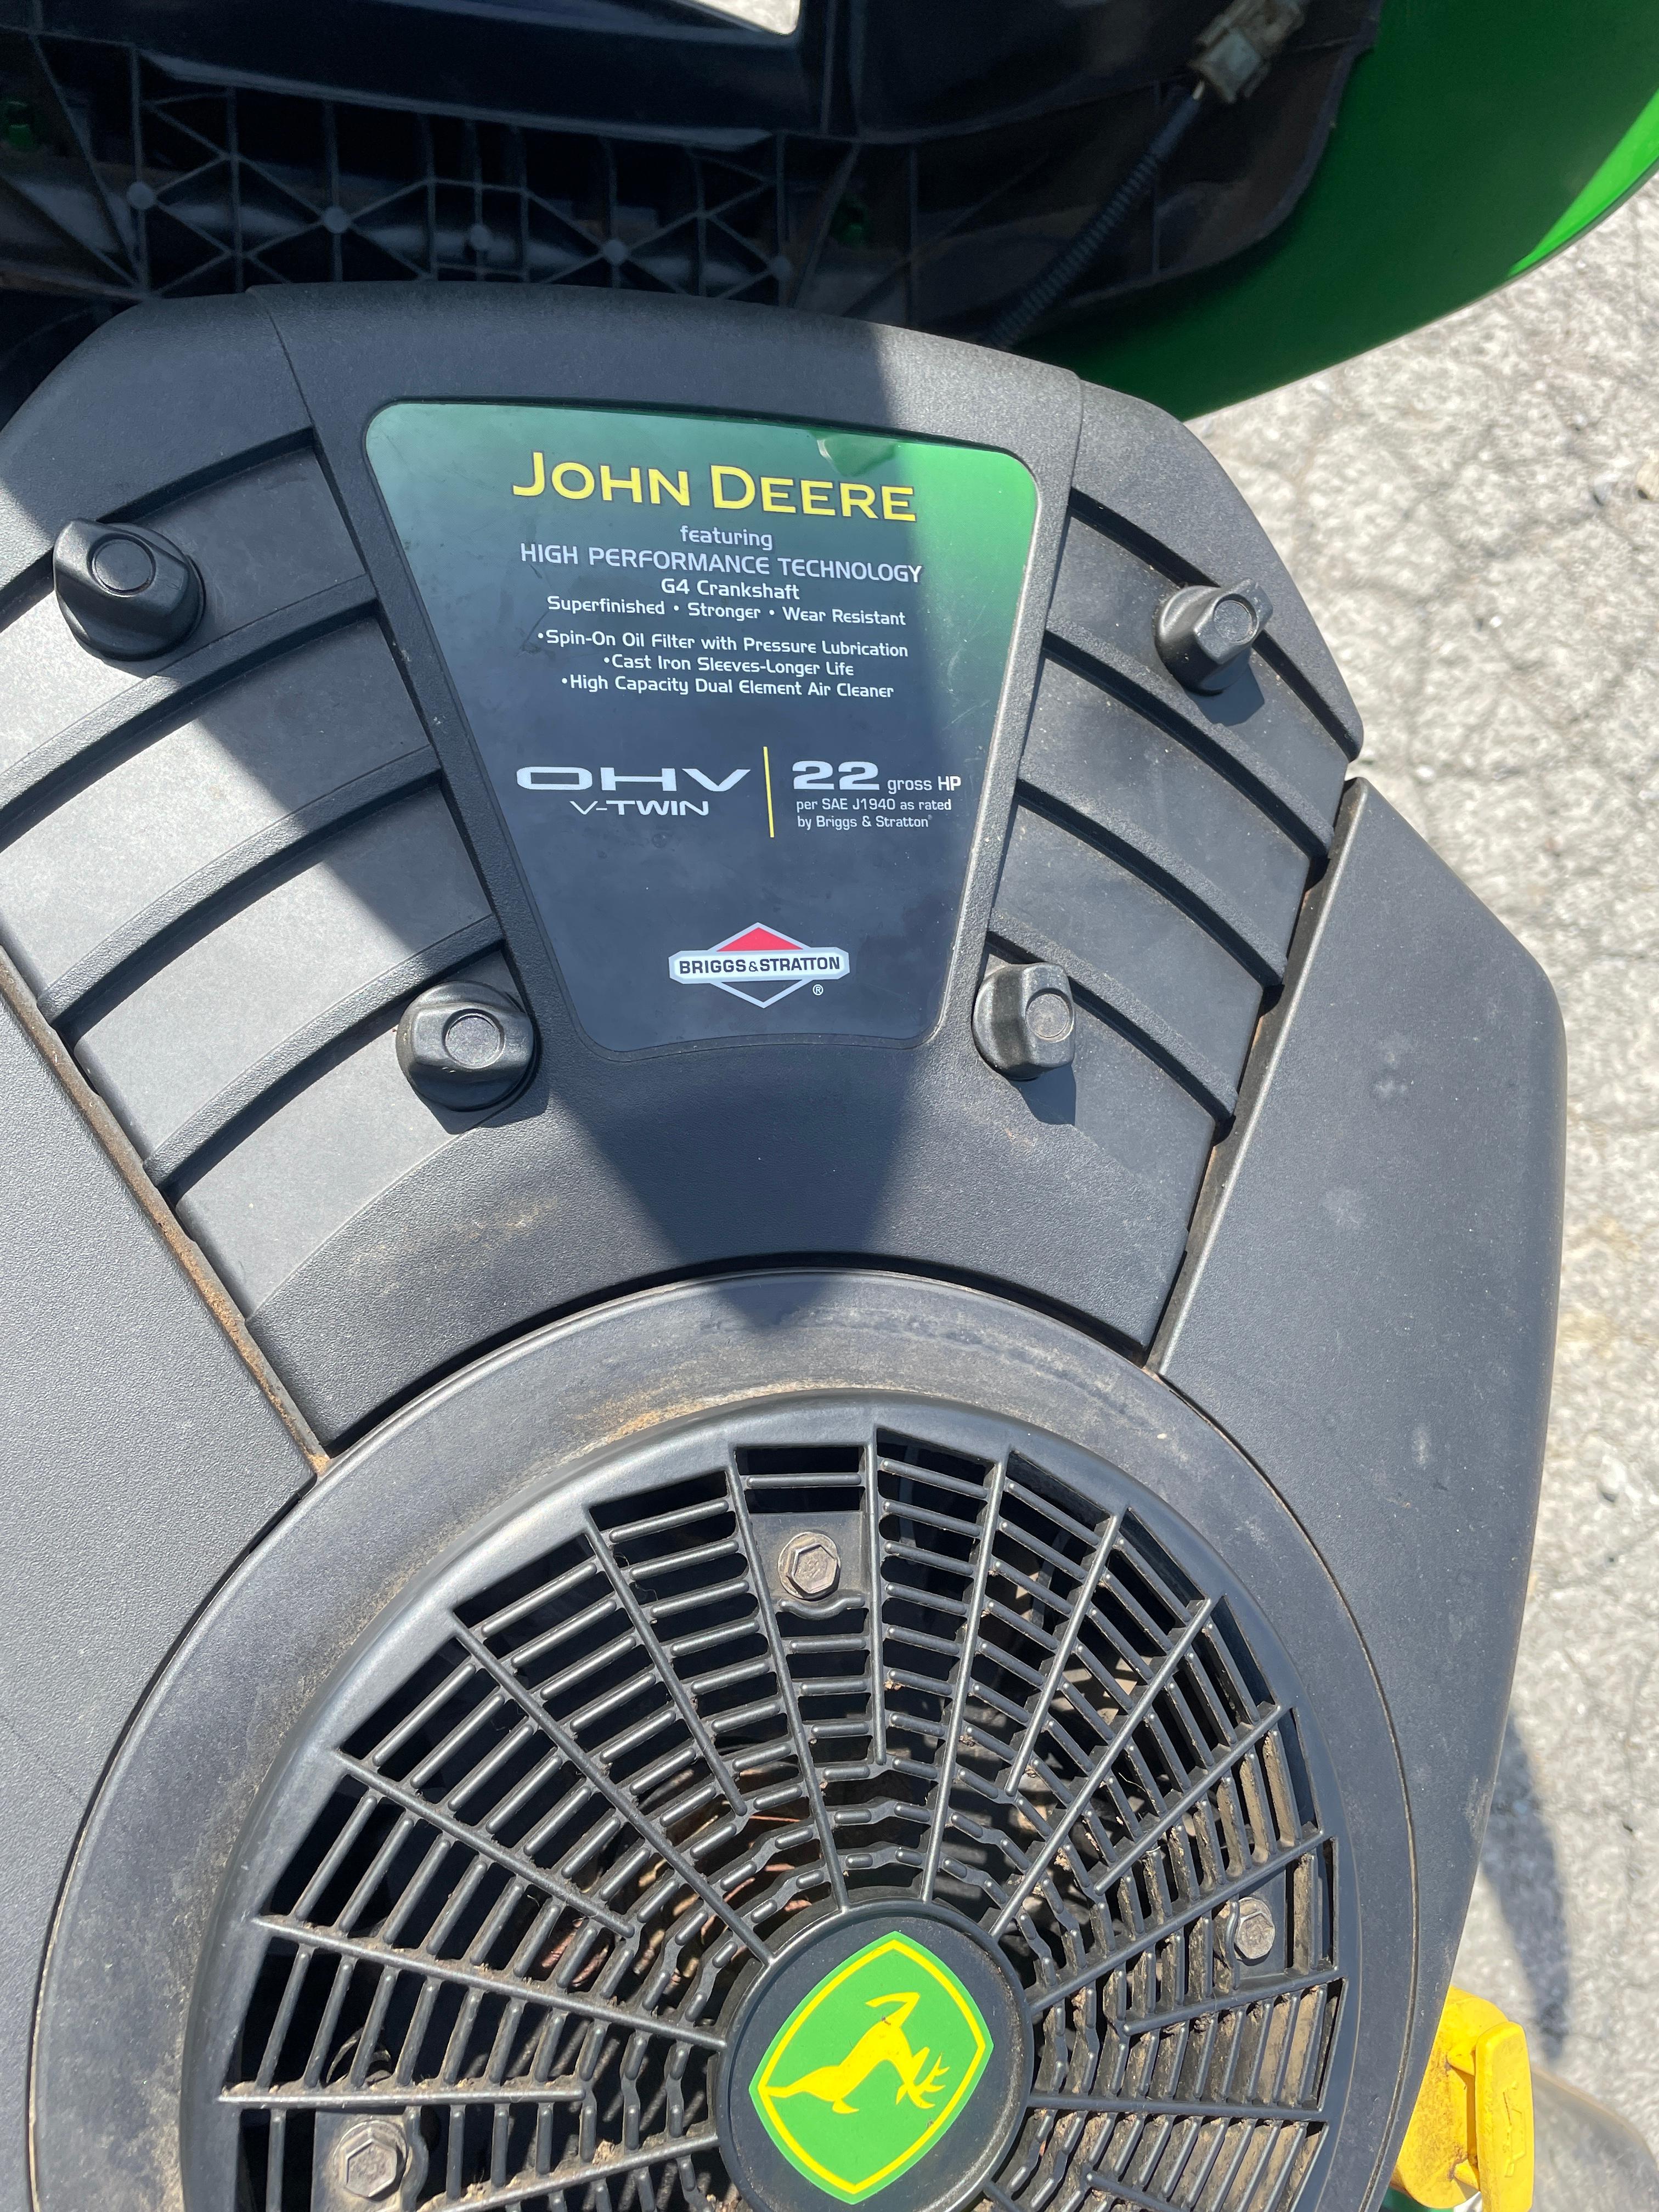 John Deere D130 42" Hydrostatic Riding Mower